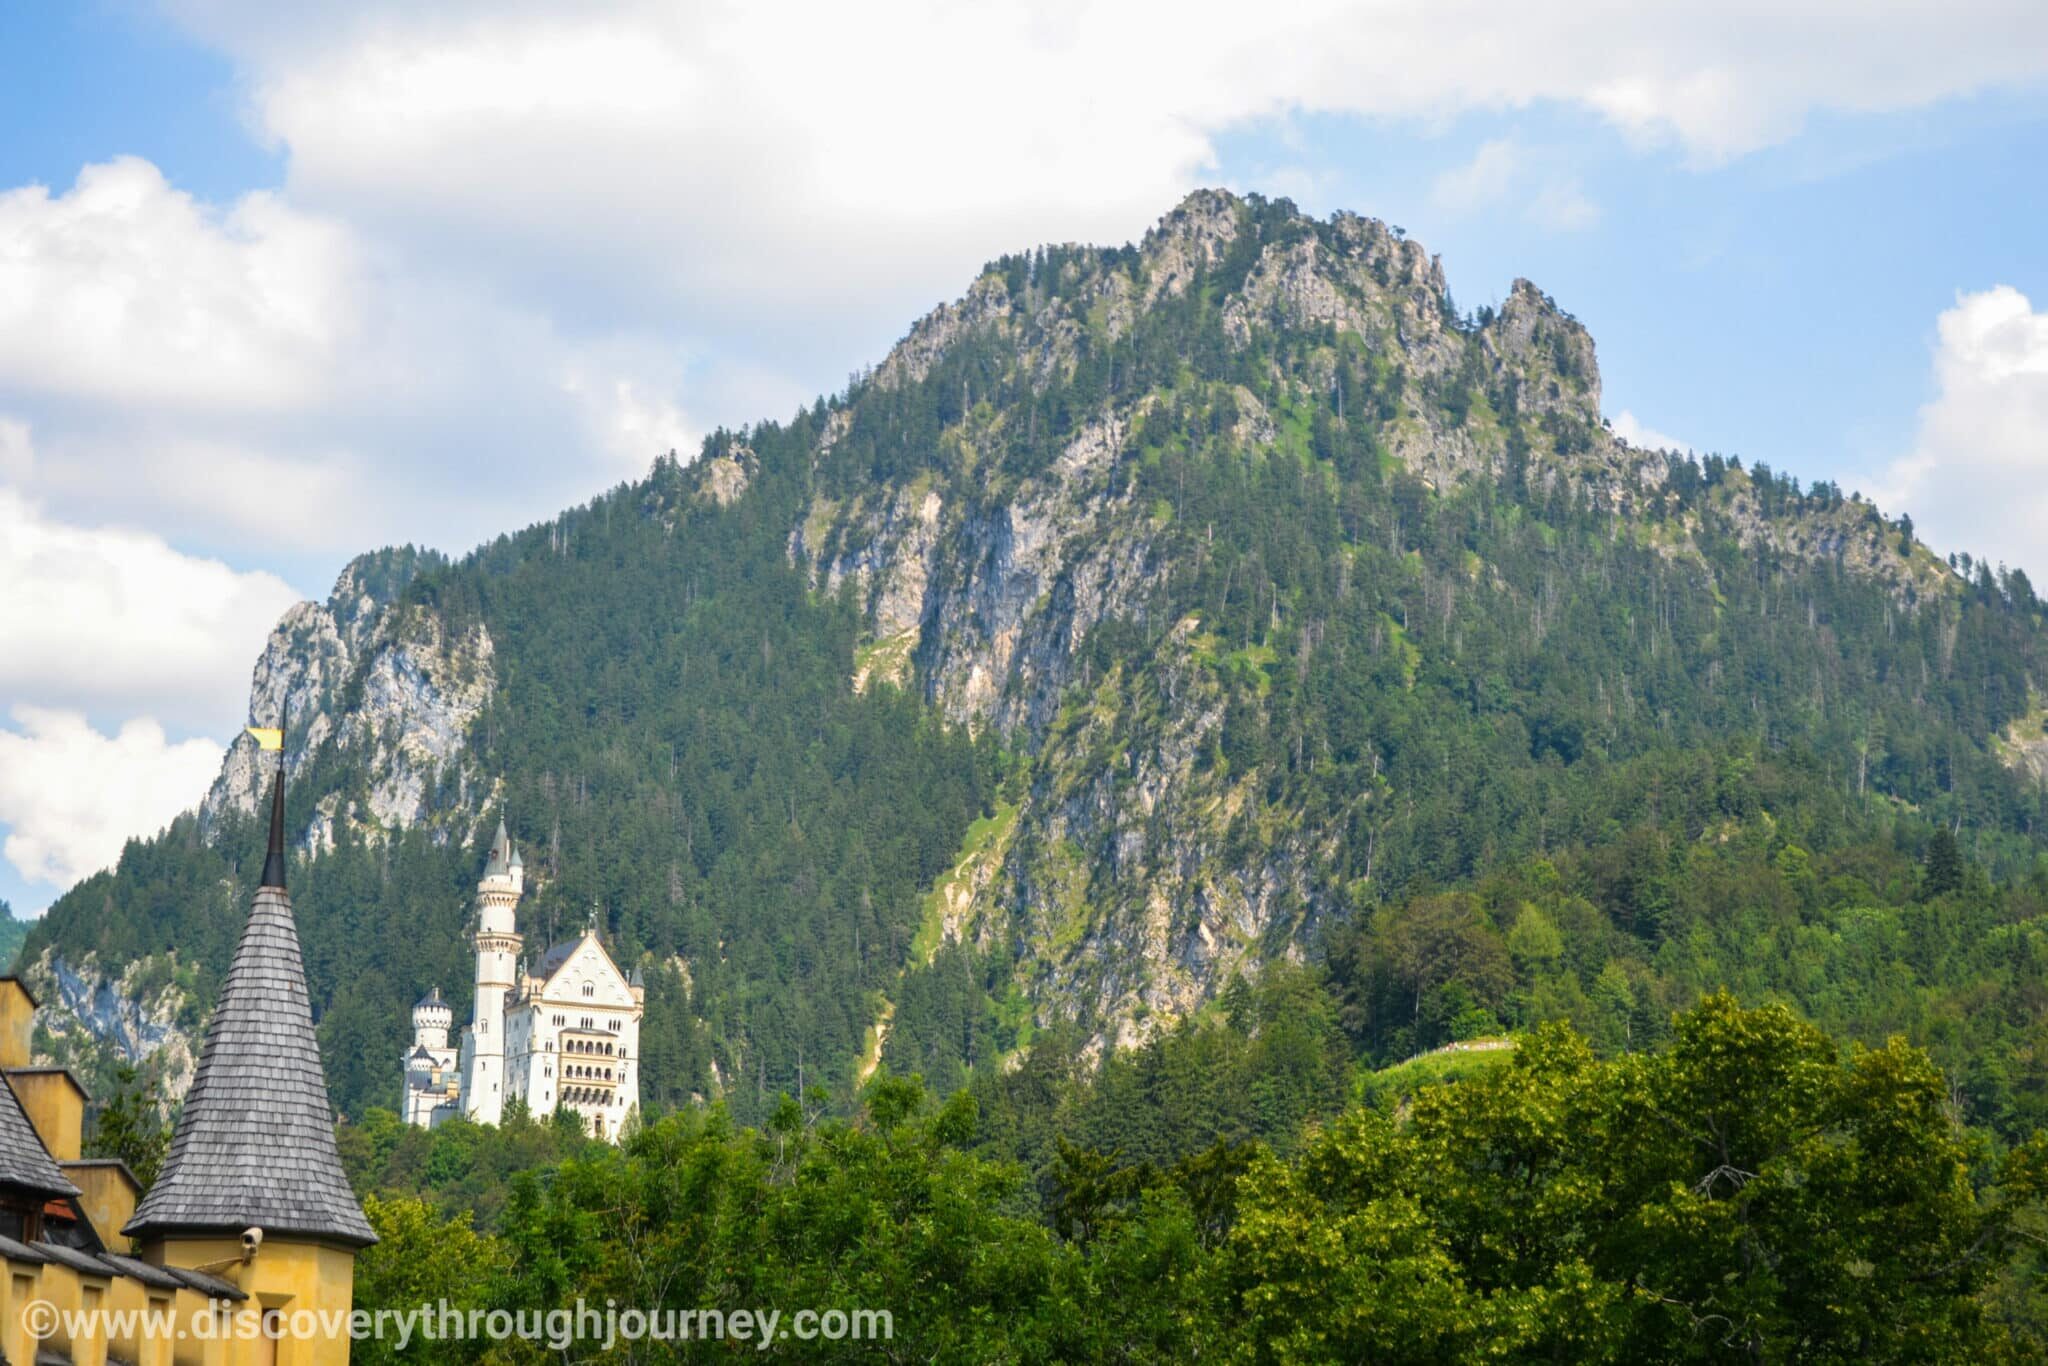 The fairy-tale castle: The Neuschwanstein Castle, Hohenschwangau, Germany